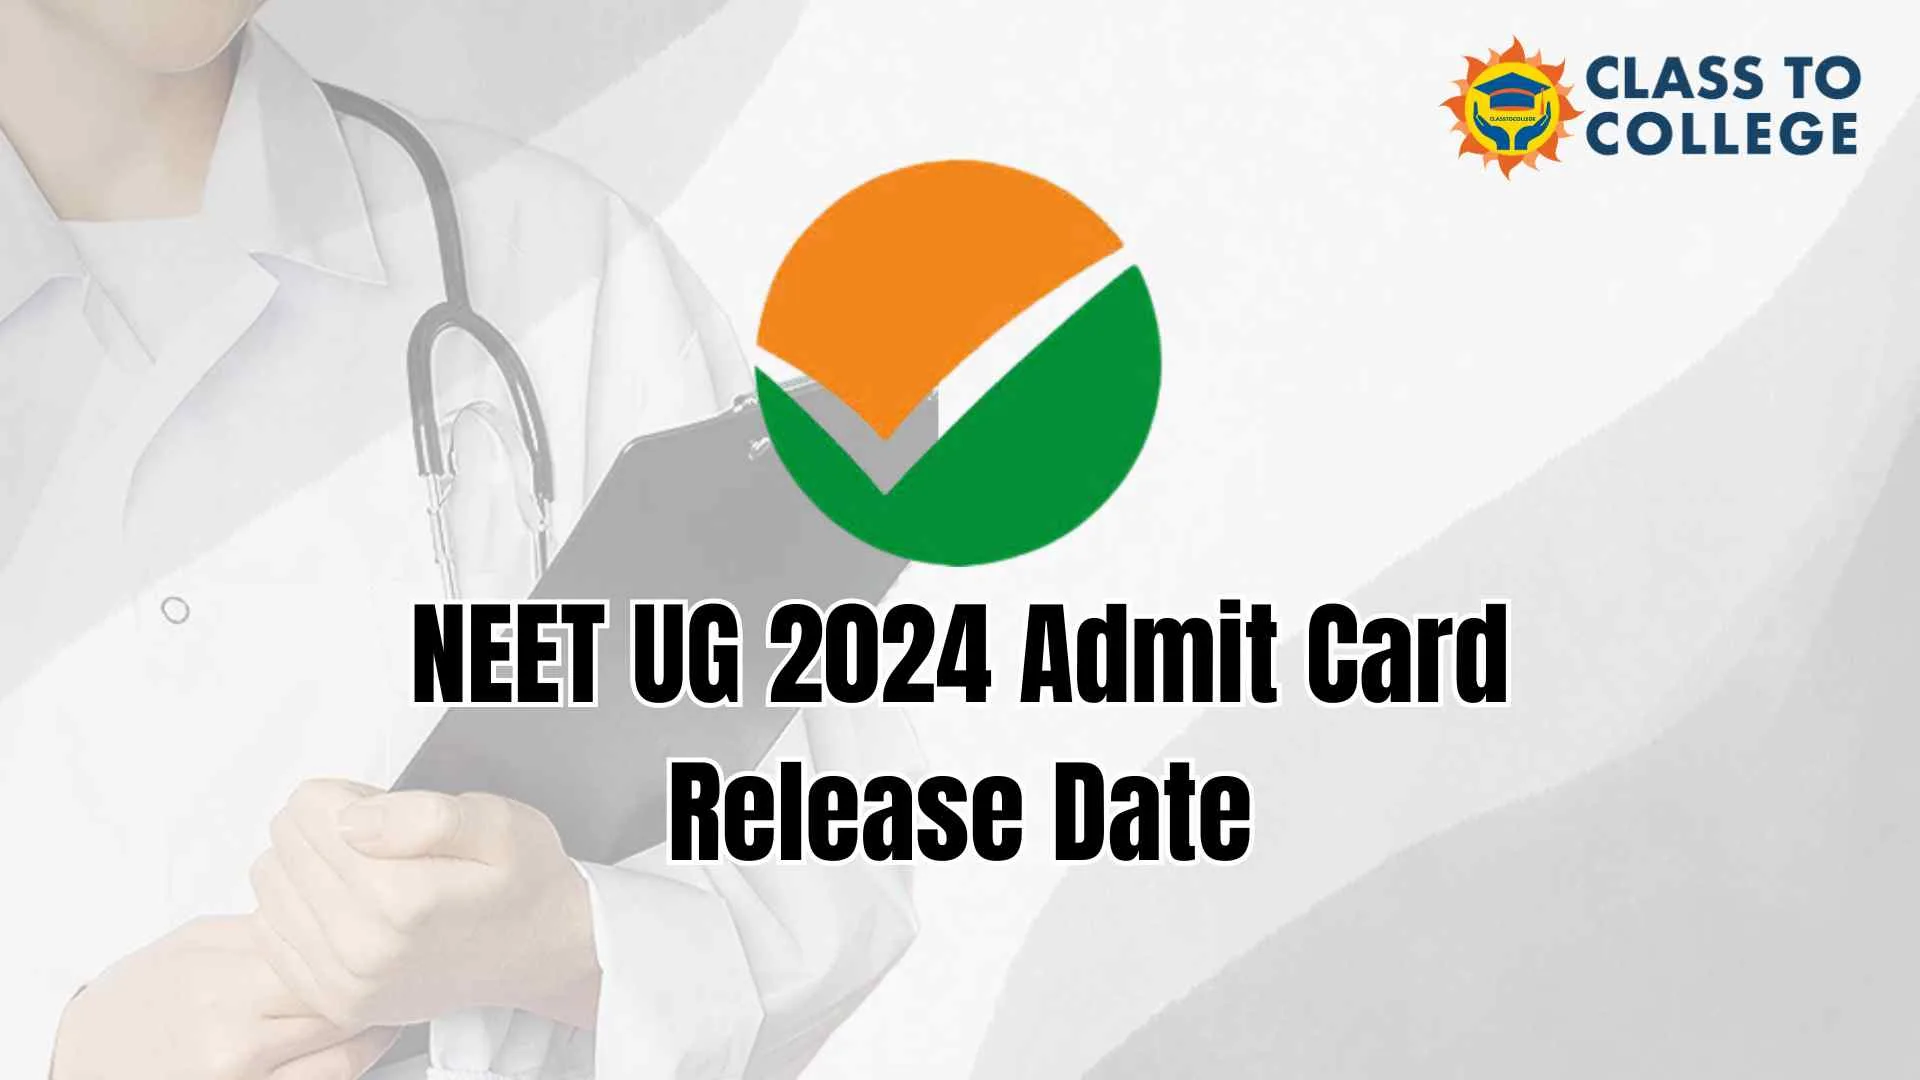 NEET UG 2024 Admit Card Release Date